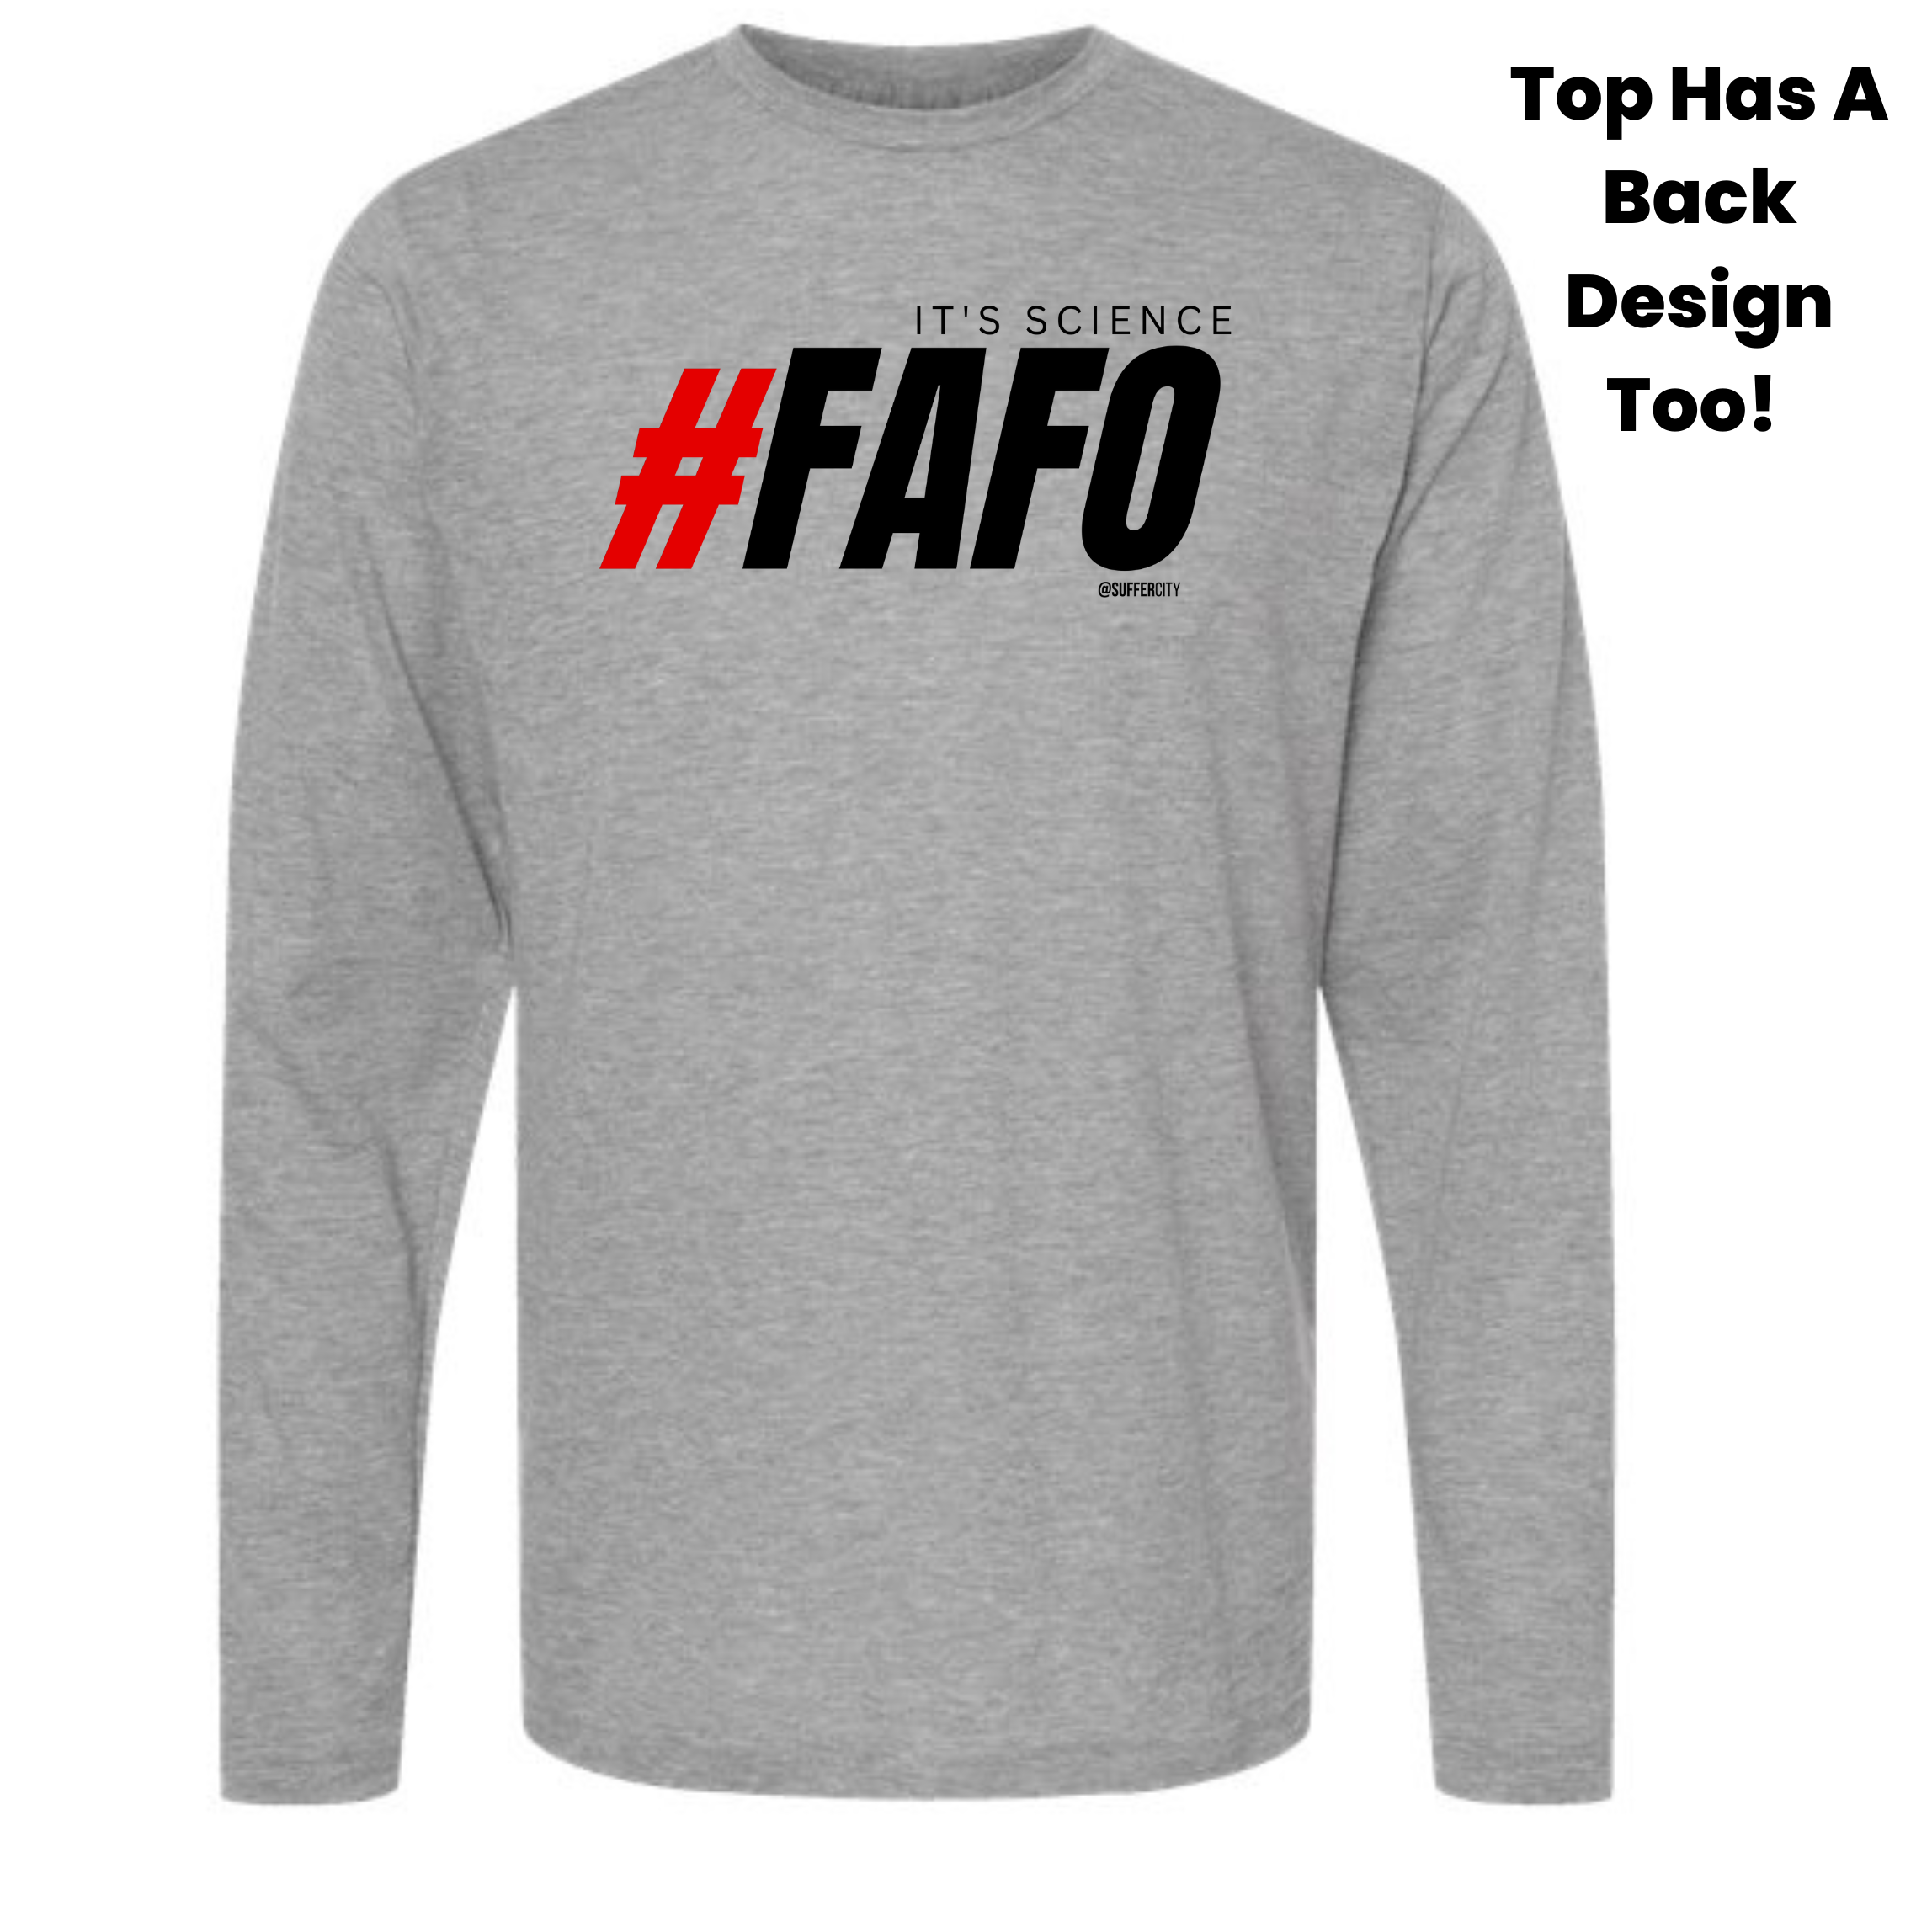 FAFO (Design on Front & Back) - “Warmer" Options